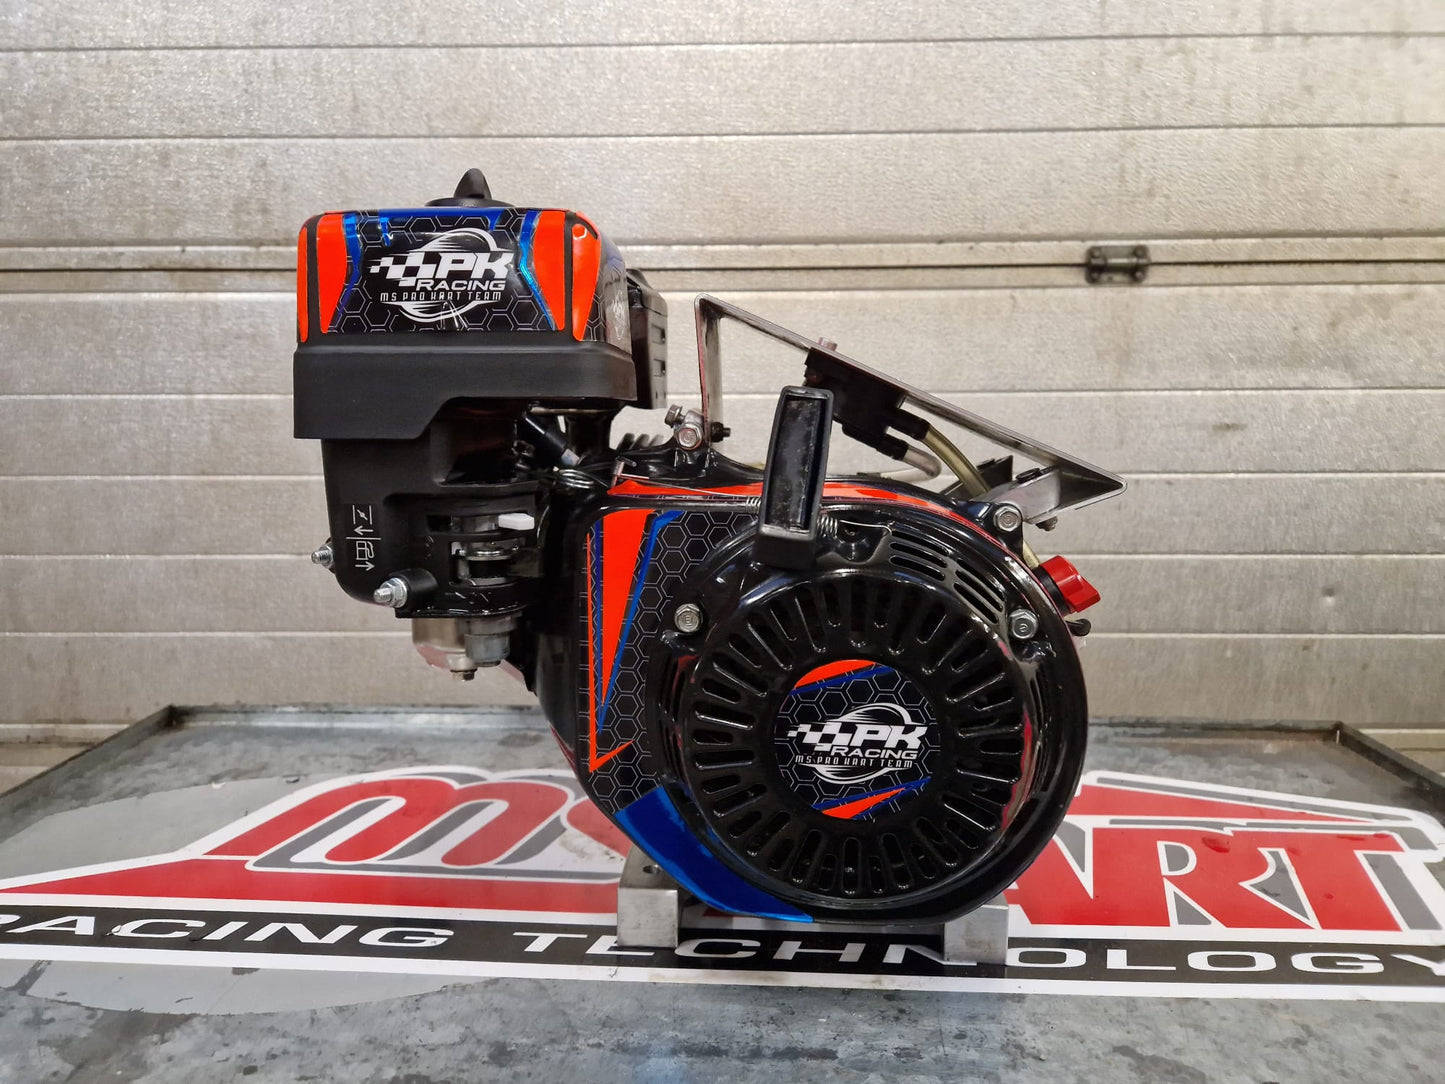 Pro Kart Nederland Honda GX160 motor